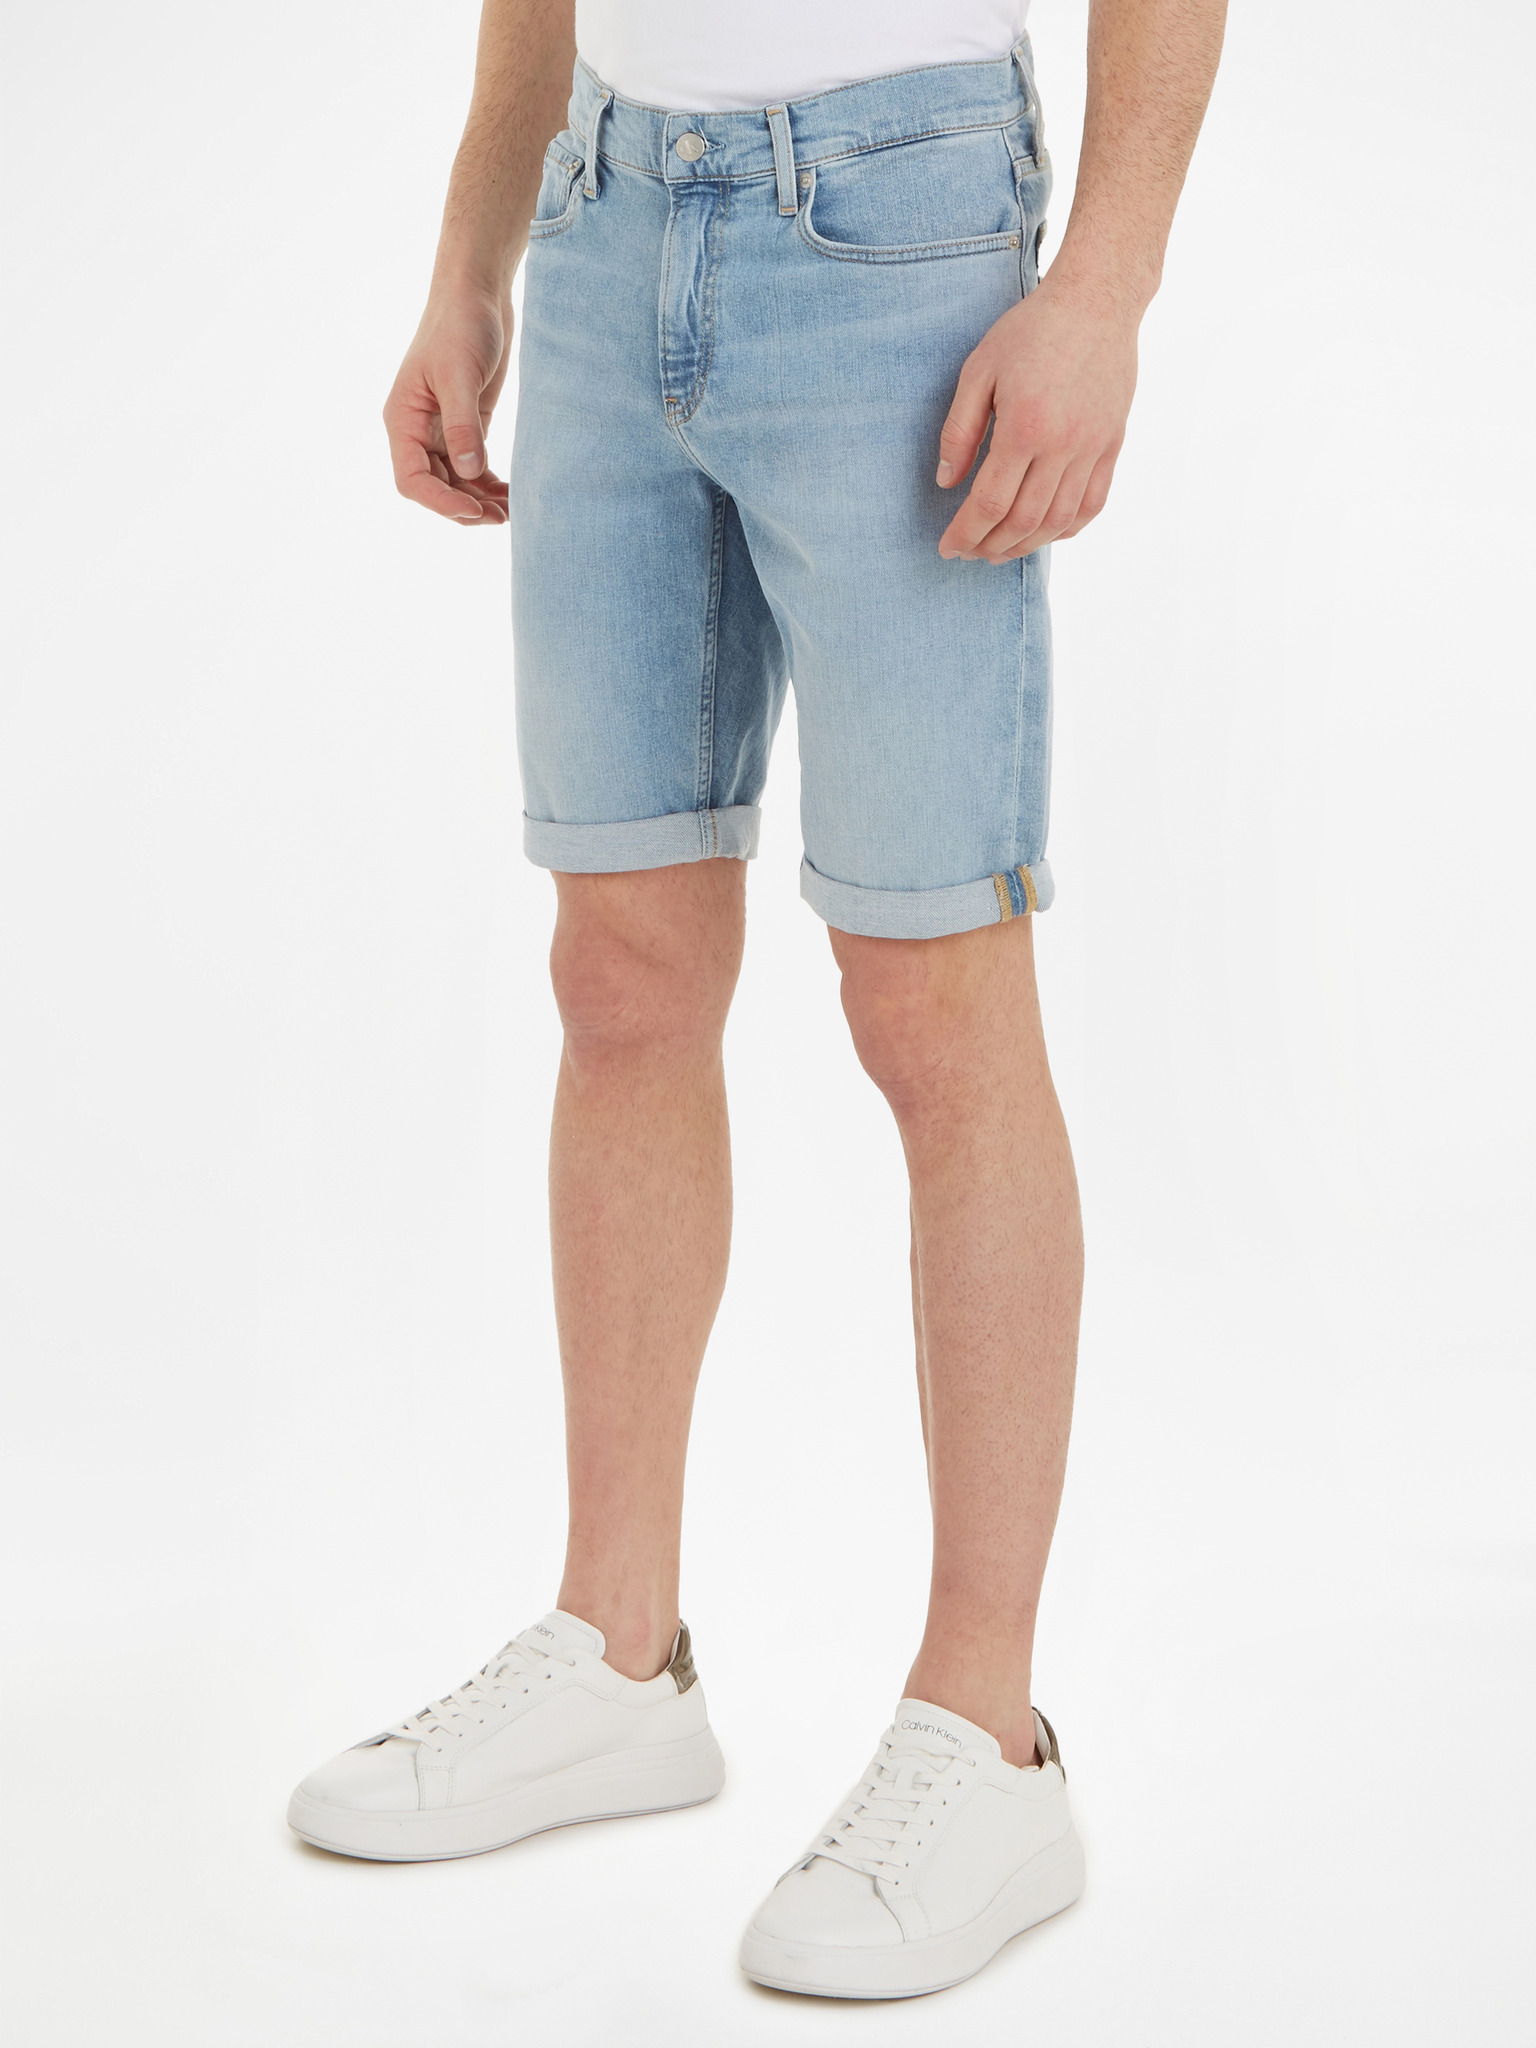 Short Men and Low Rise Pants % % | Mens shorts, Short legs long torso, Men  style tips